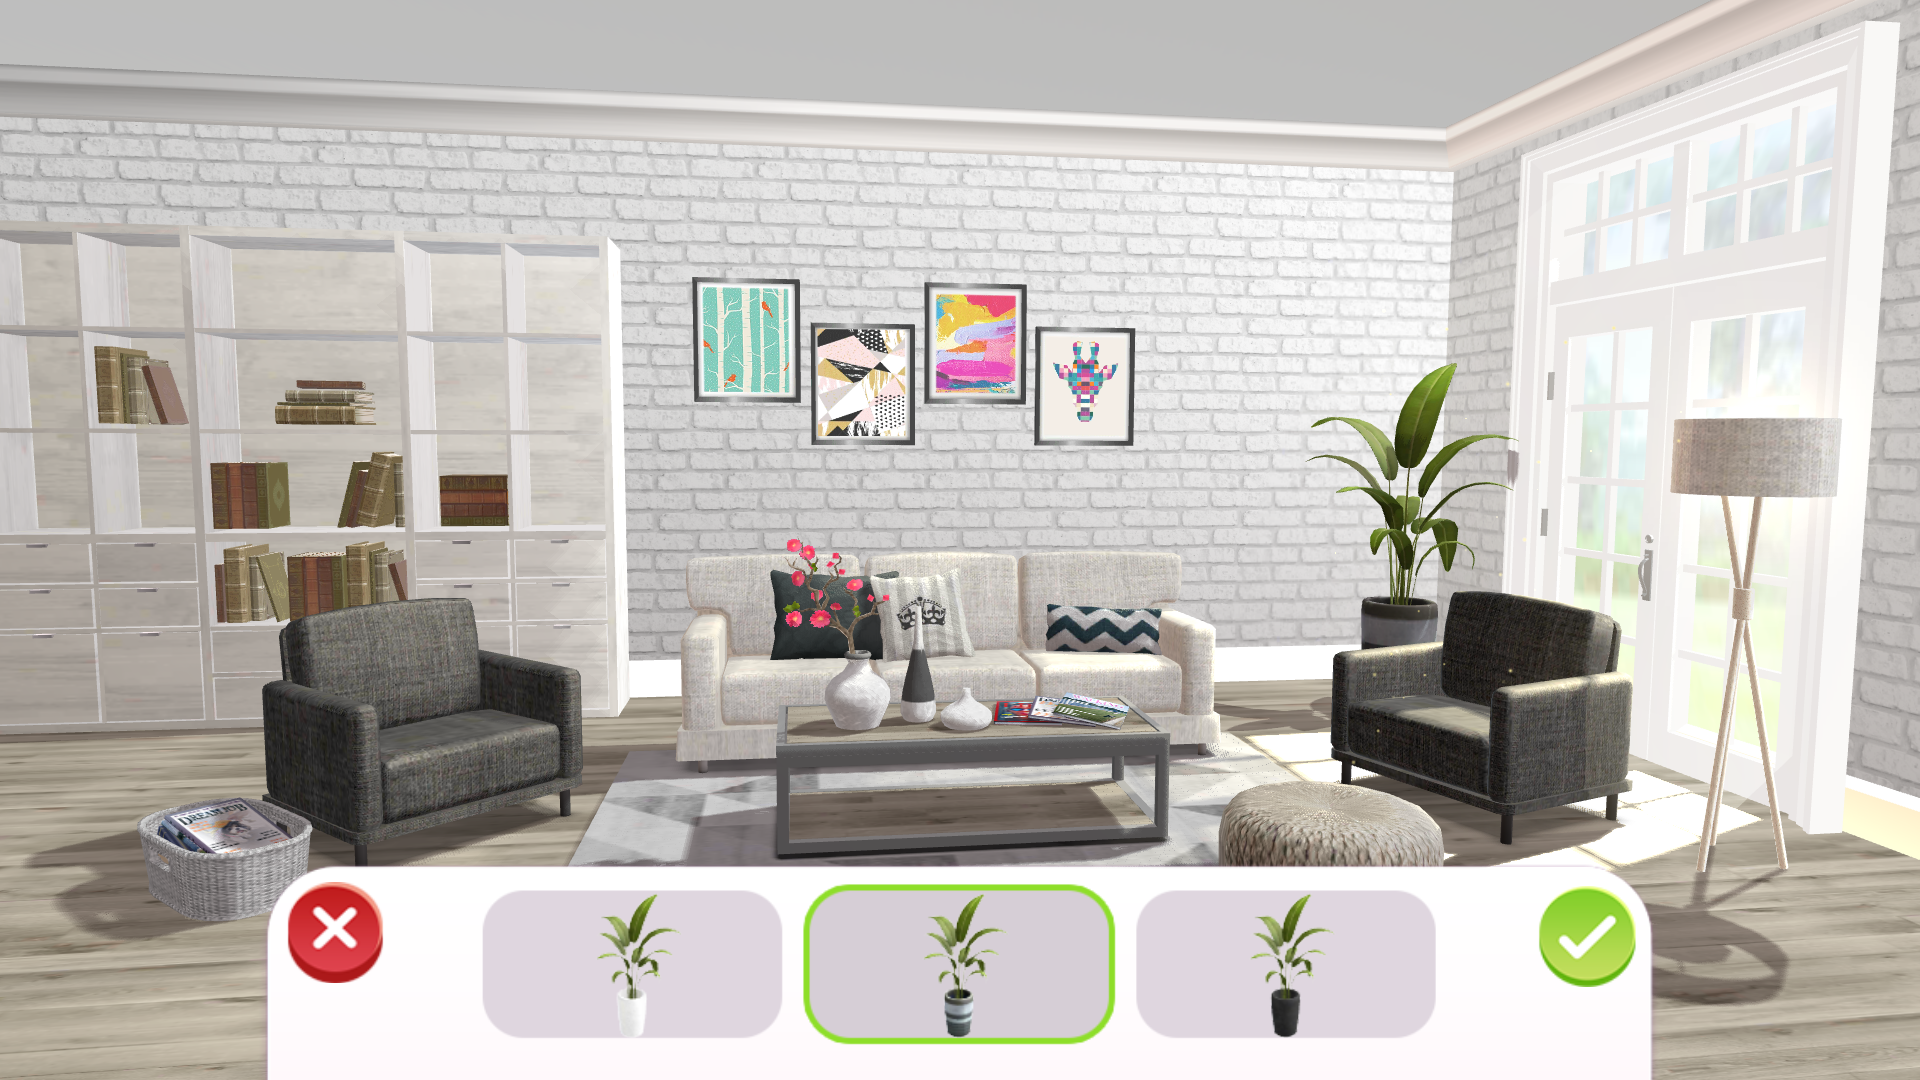 home design makeover app won